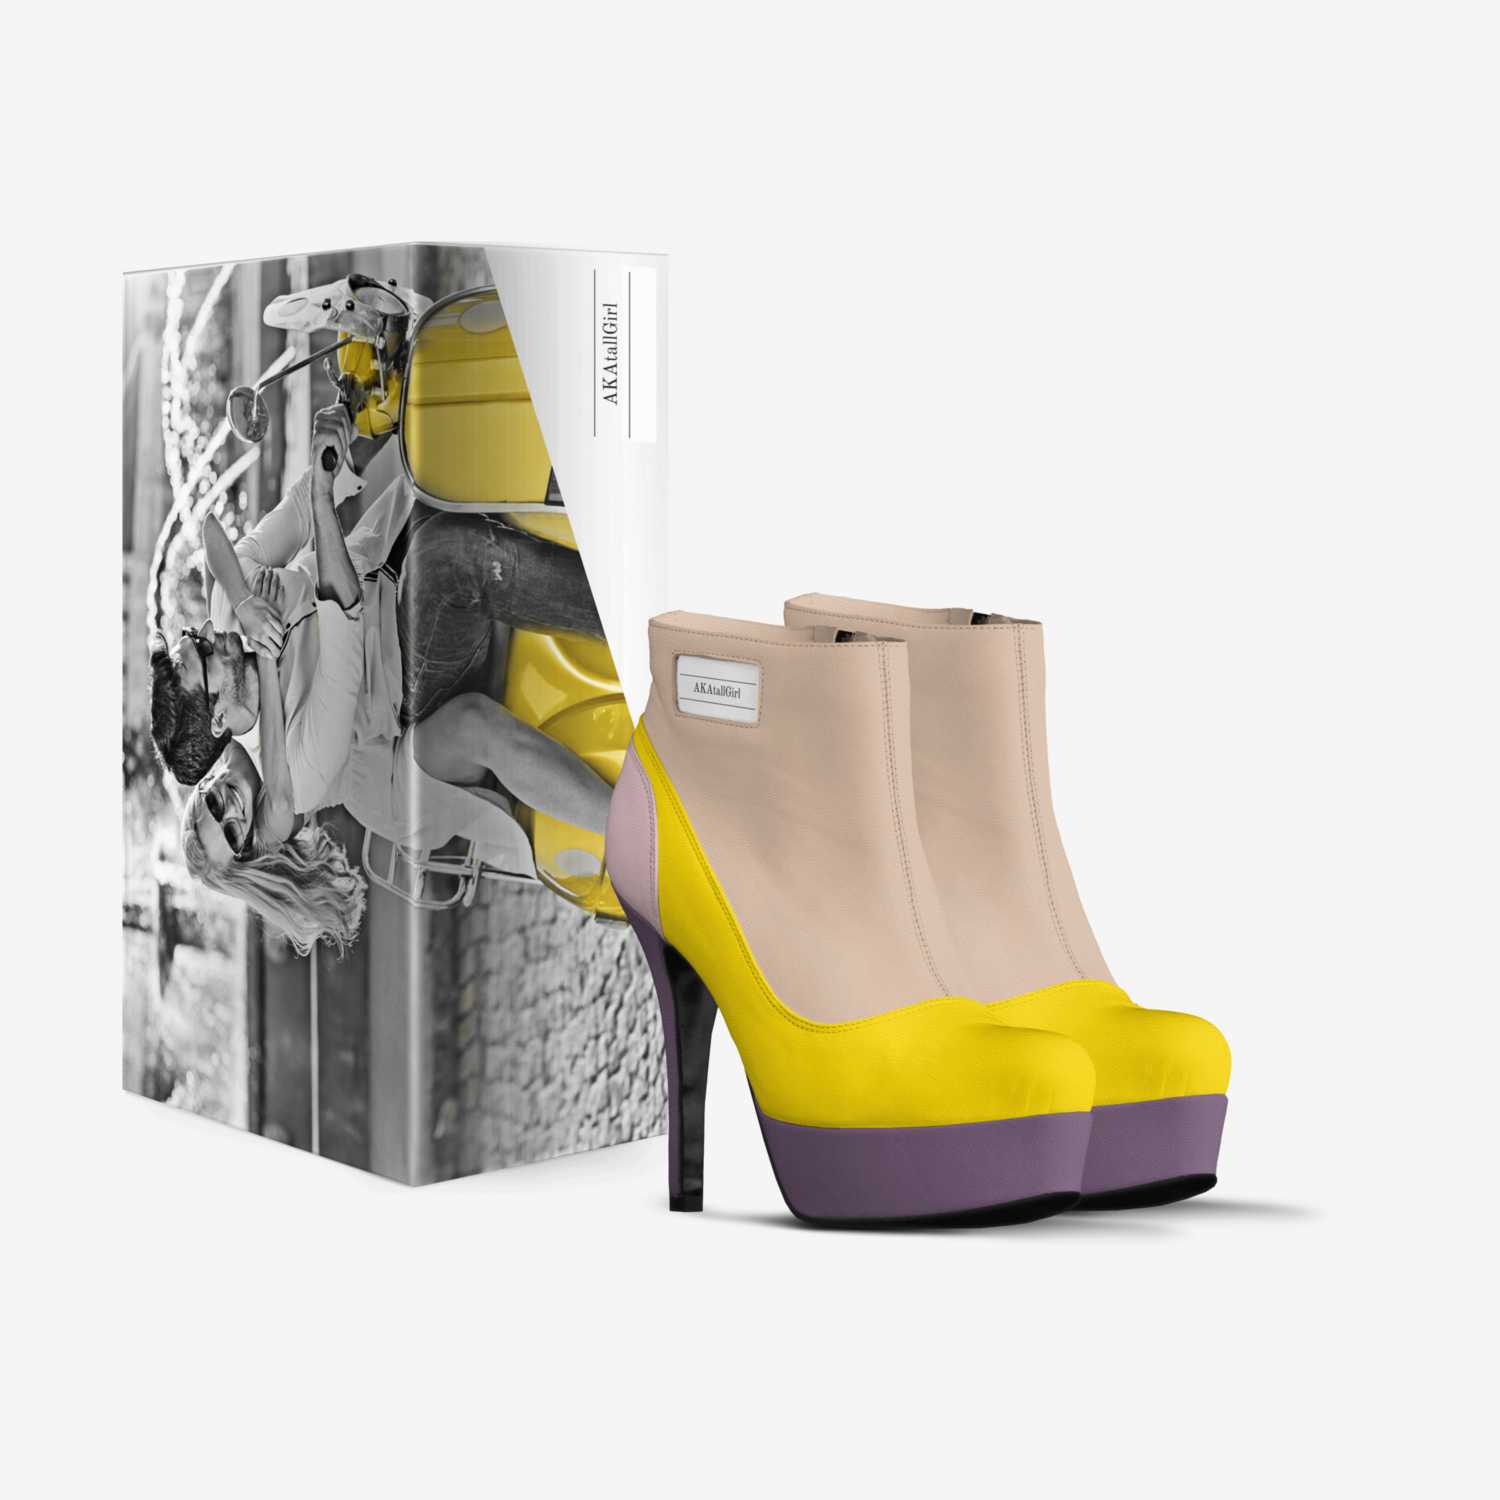 AKAtallGirl custom made in Italy shoes by Nadya Halmagyi | Box view